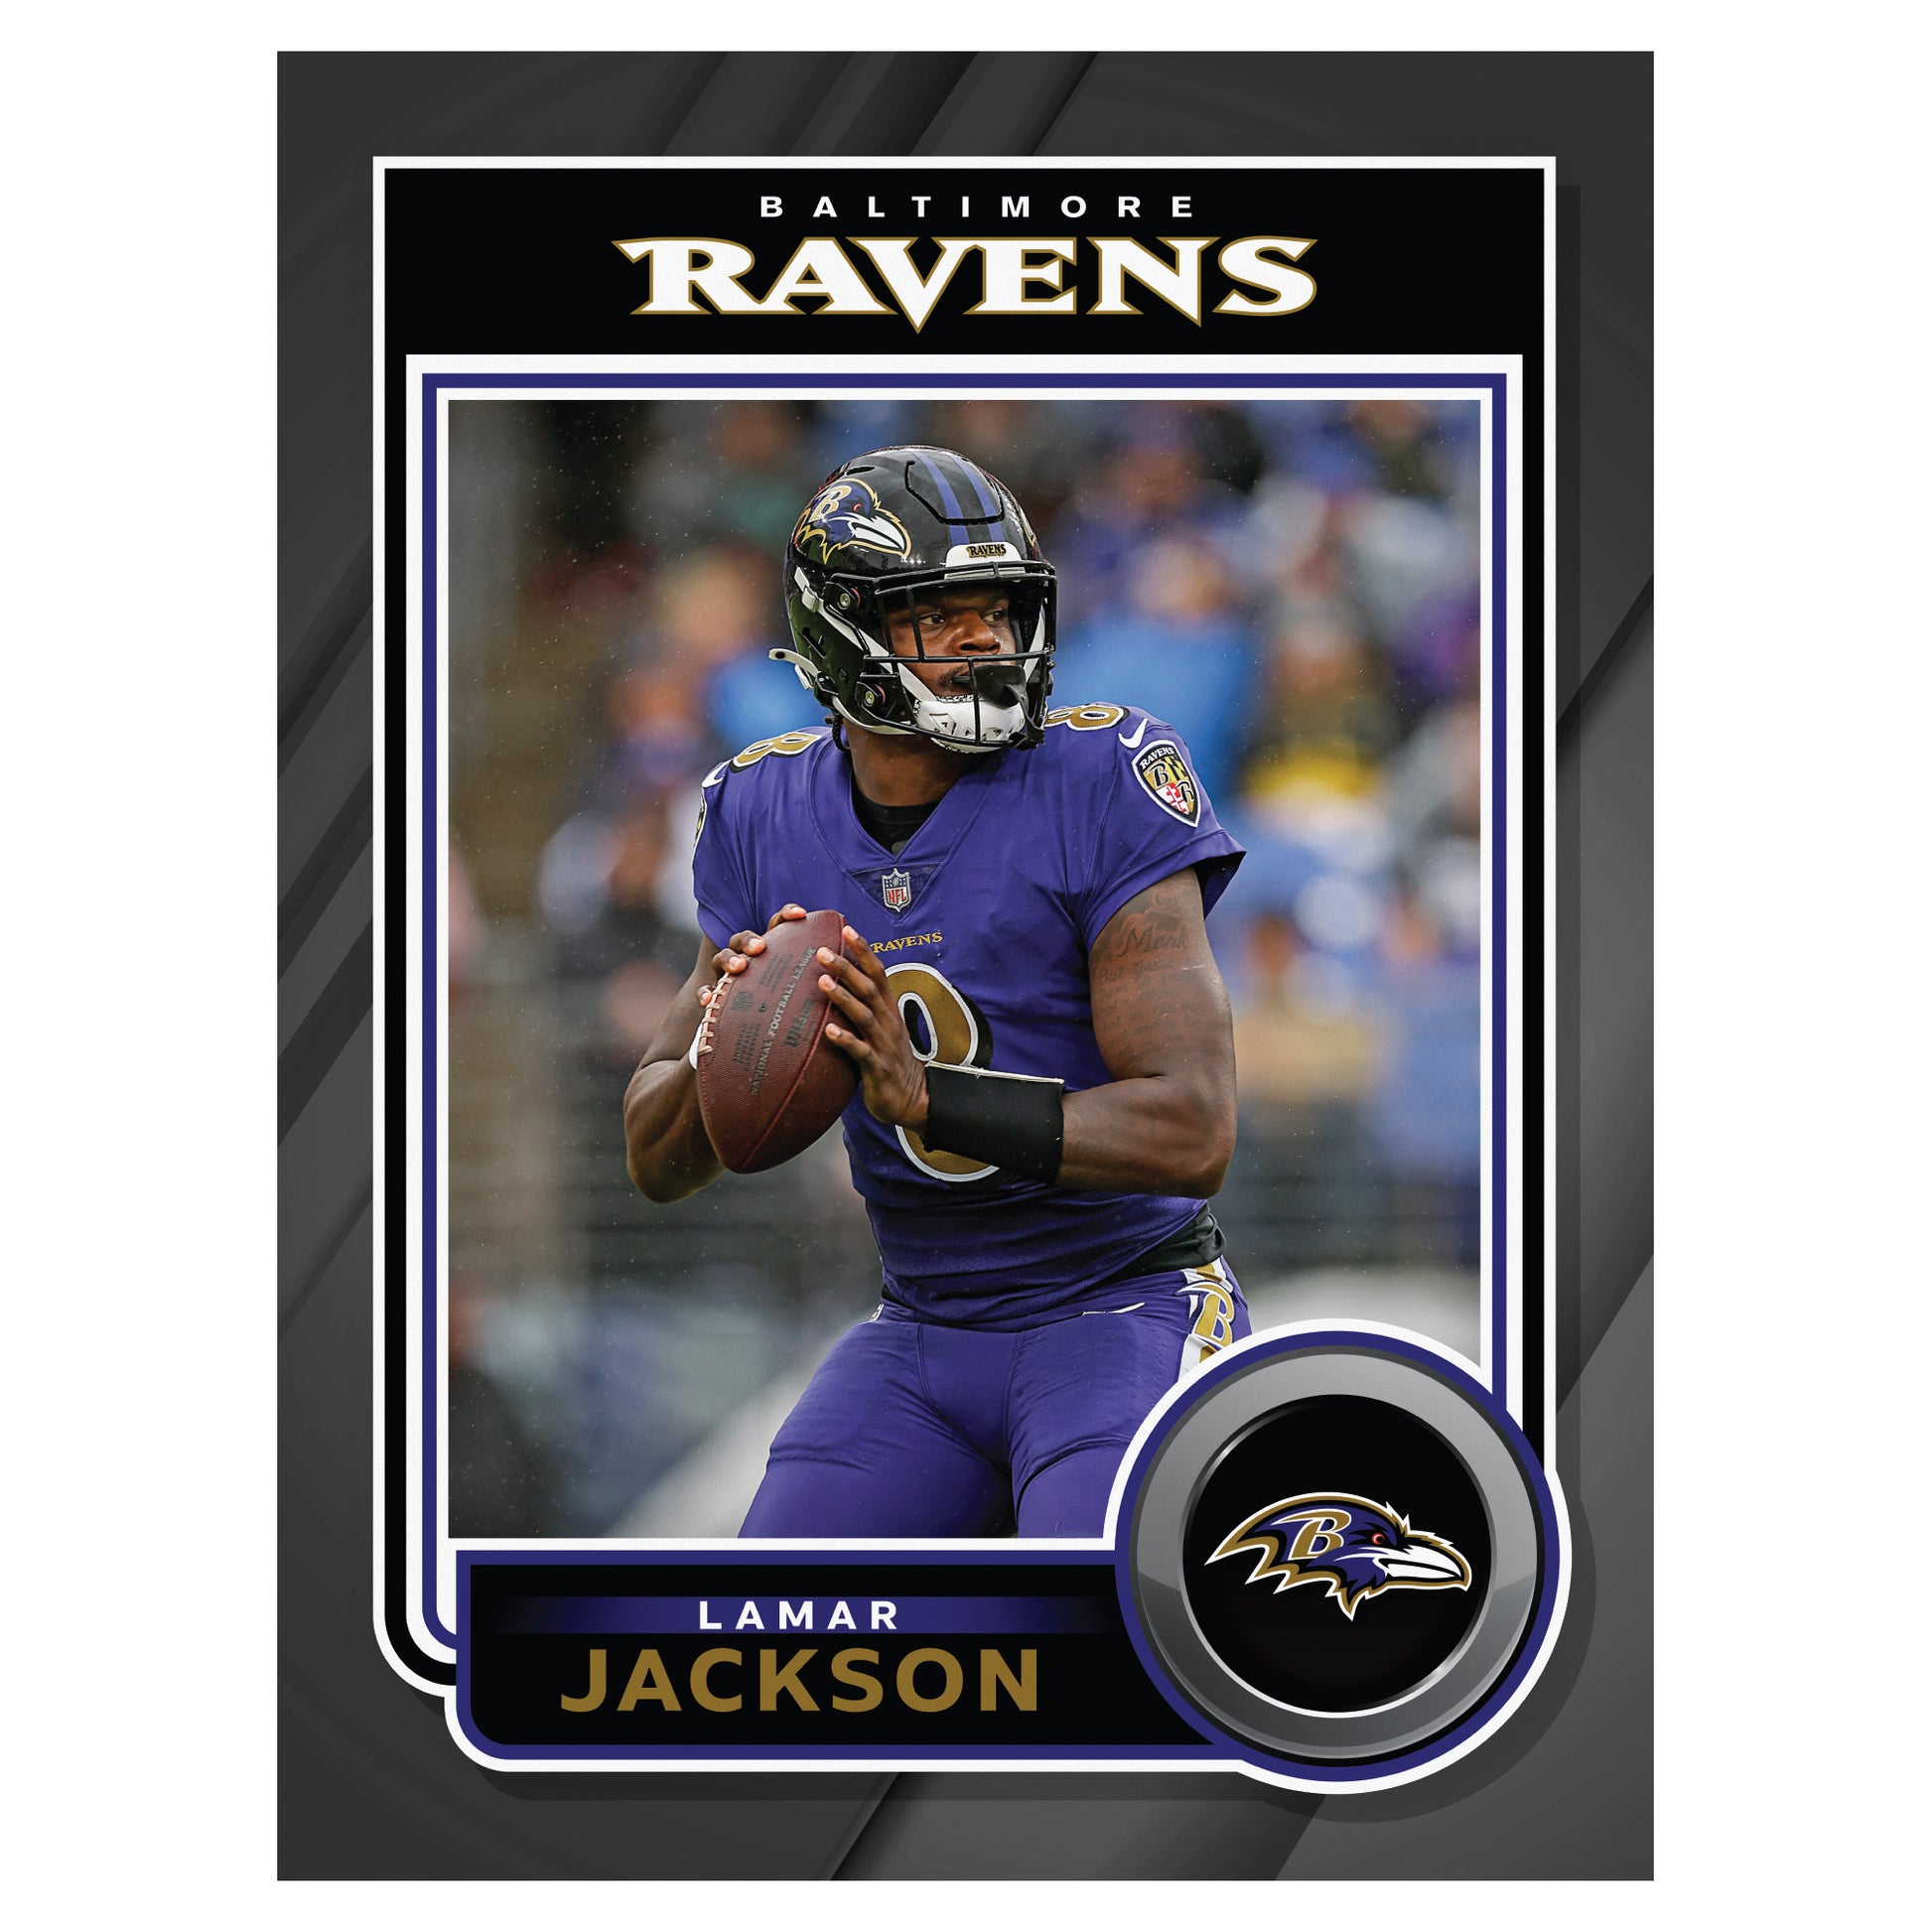 NFL Baltimore Ravens RFLCTV (Lamar Jackson) Men's Fashion Football Jersey.